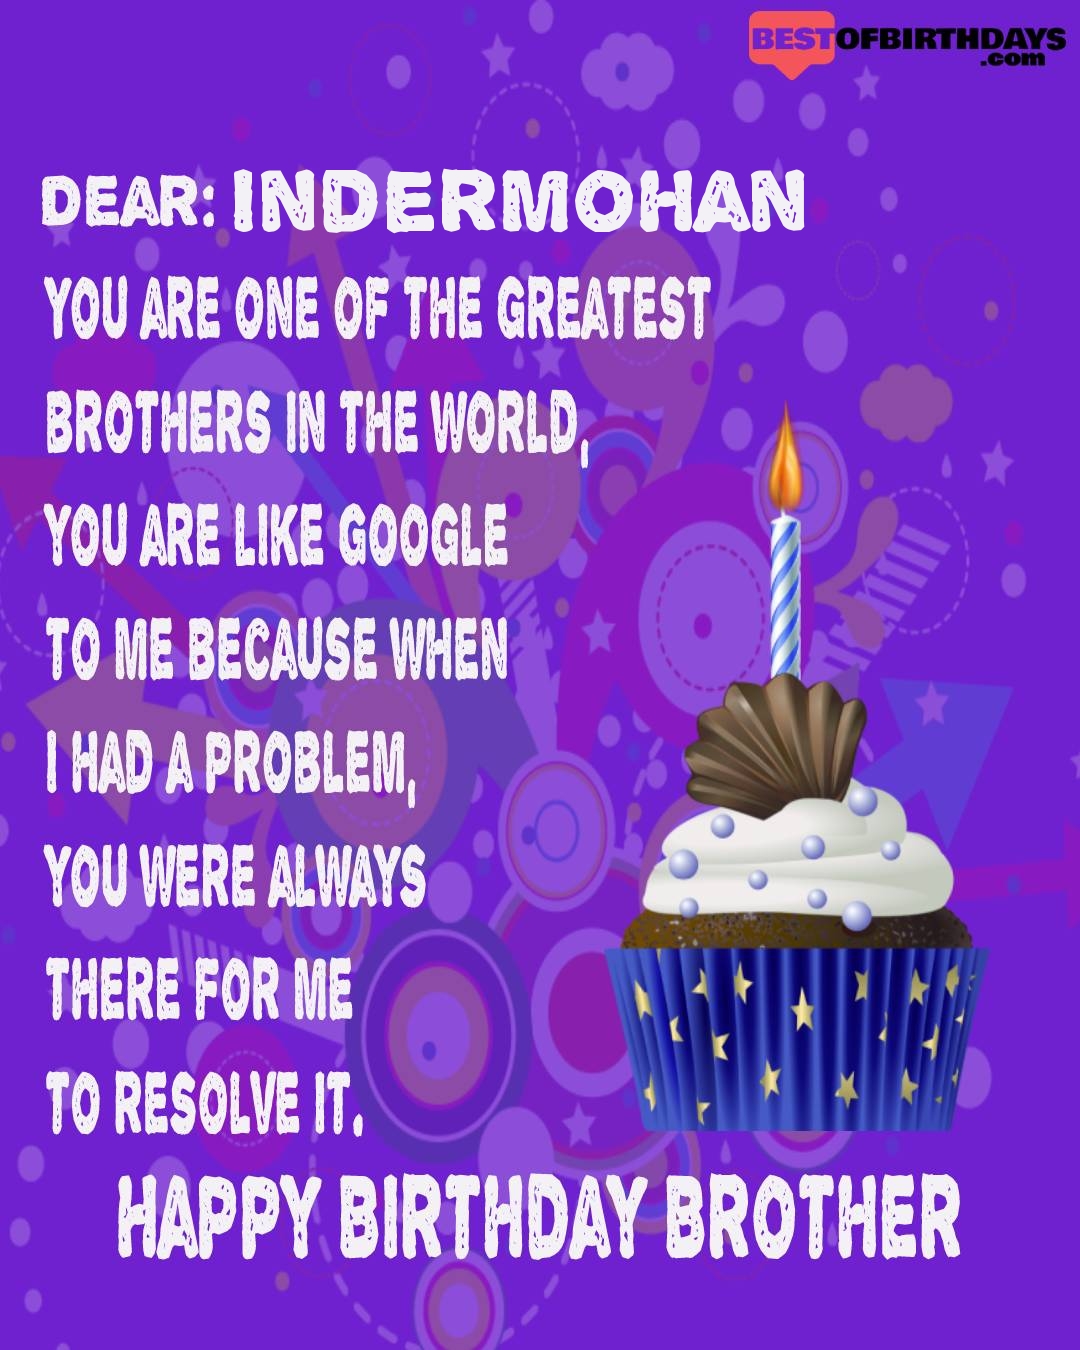 Happy birthday indermohan bhai brother bro